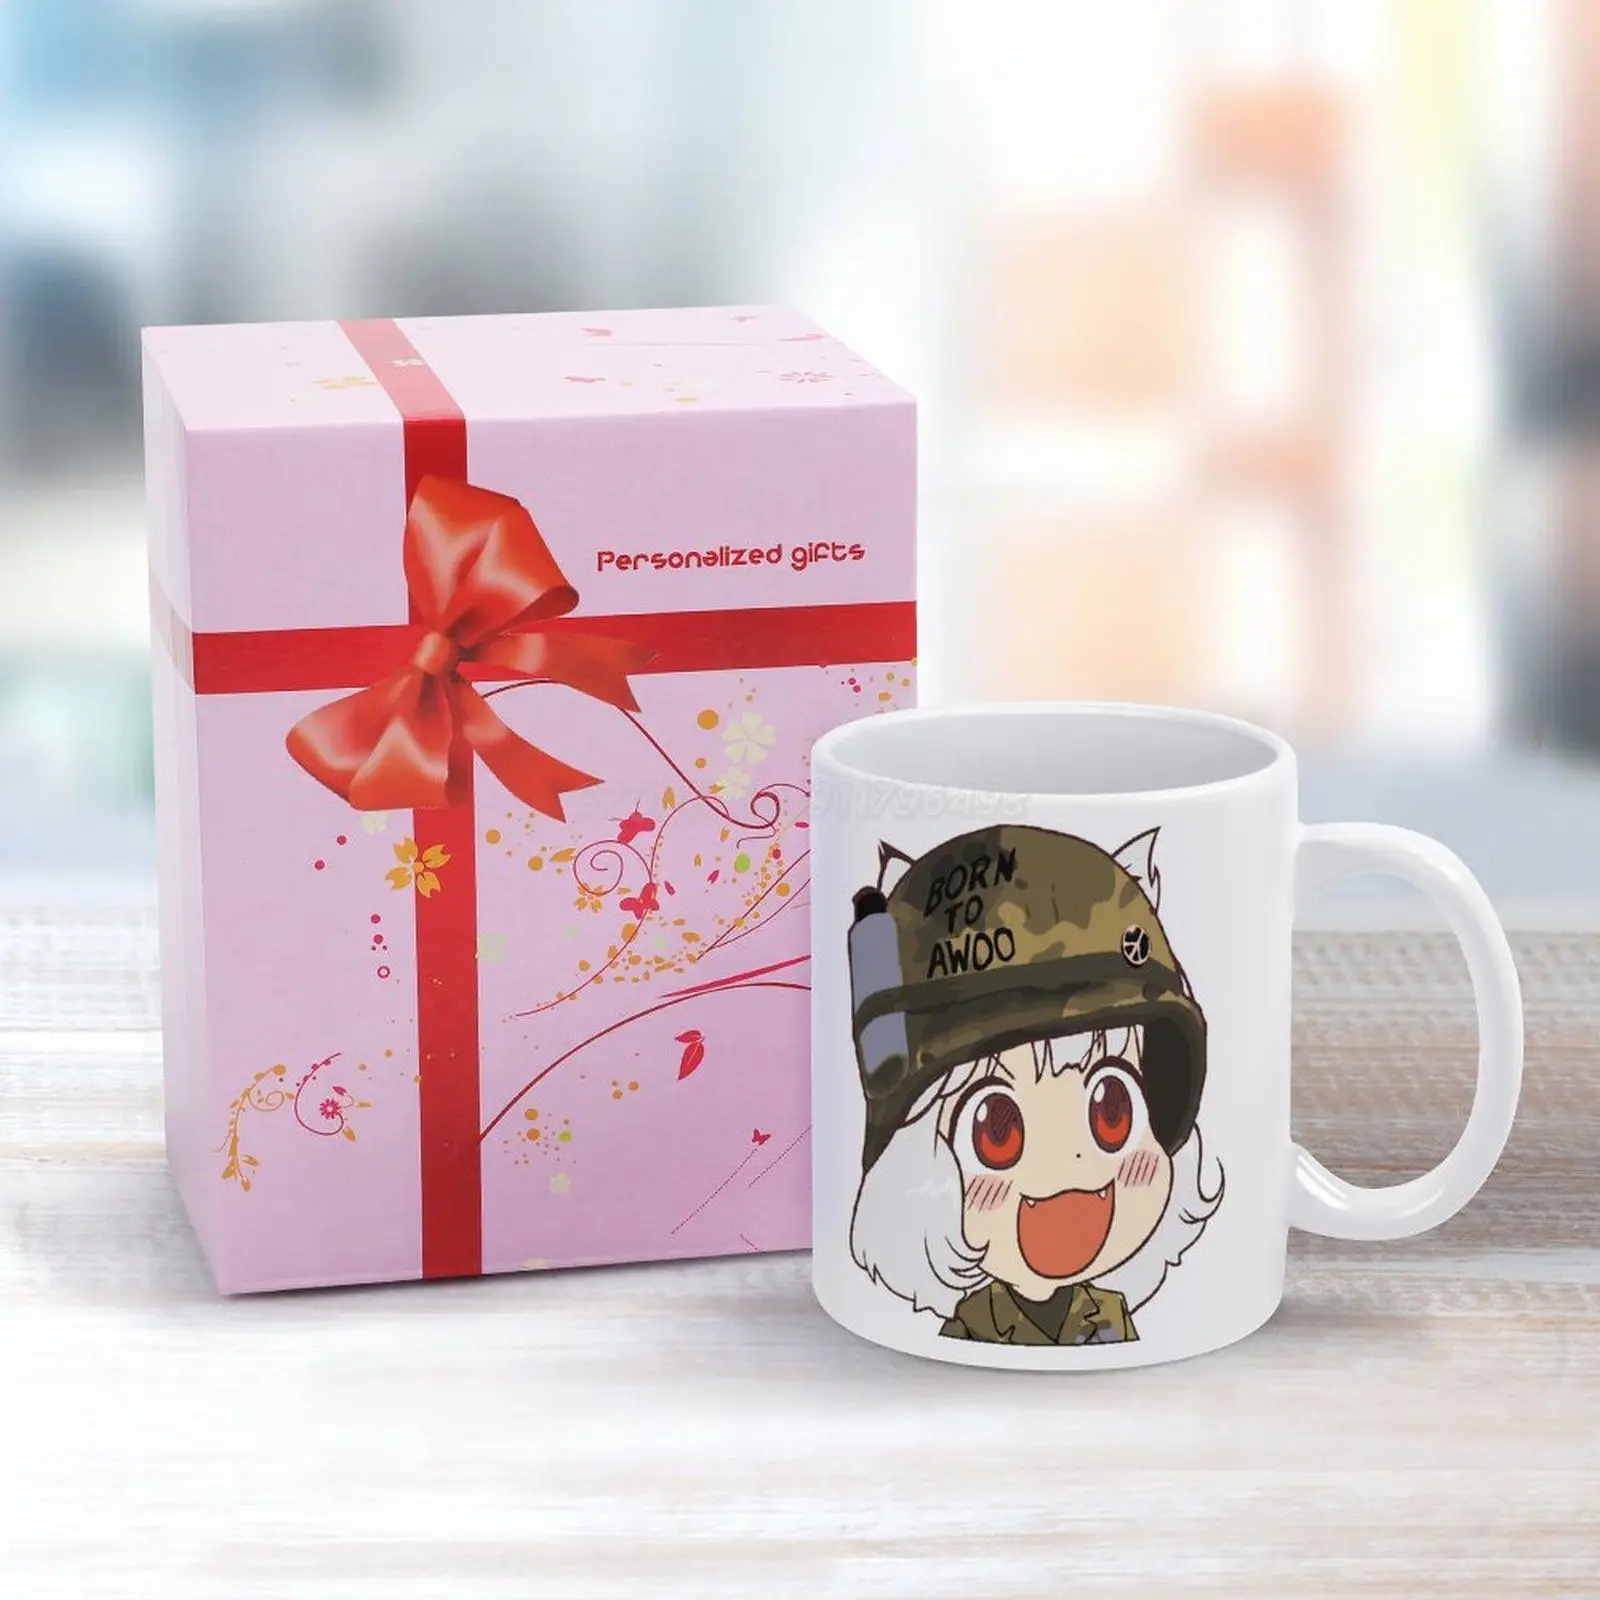  HOF Trading Awoo Anime Girl Big Smile Kekistan Army Military  Born to Awoo with Peace Symbol #Trumpanime Hd Online Store Vinyl Sticker  Waterproof Decal Laptop Wall Window Bumper Sticker 5 